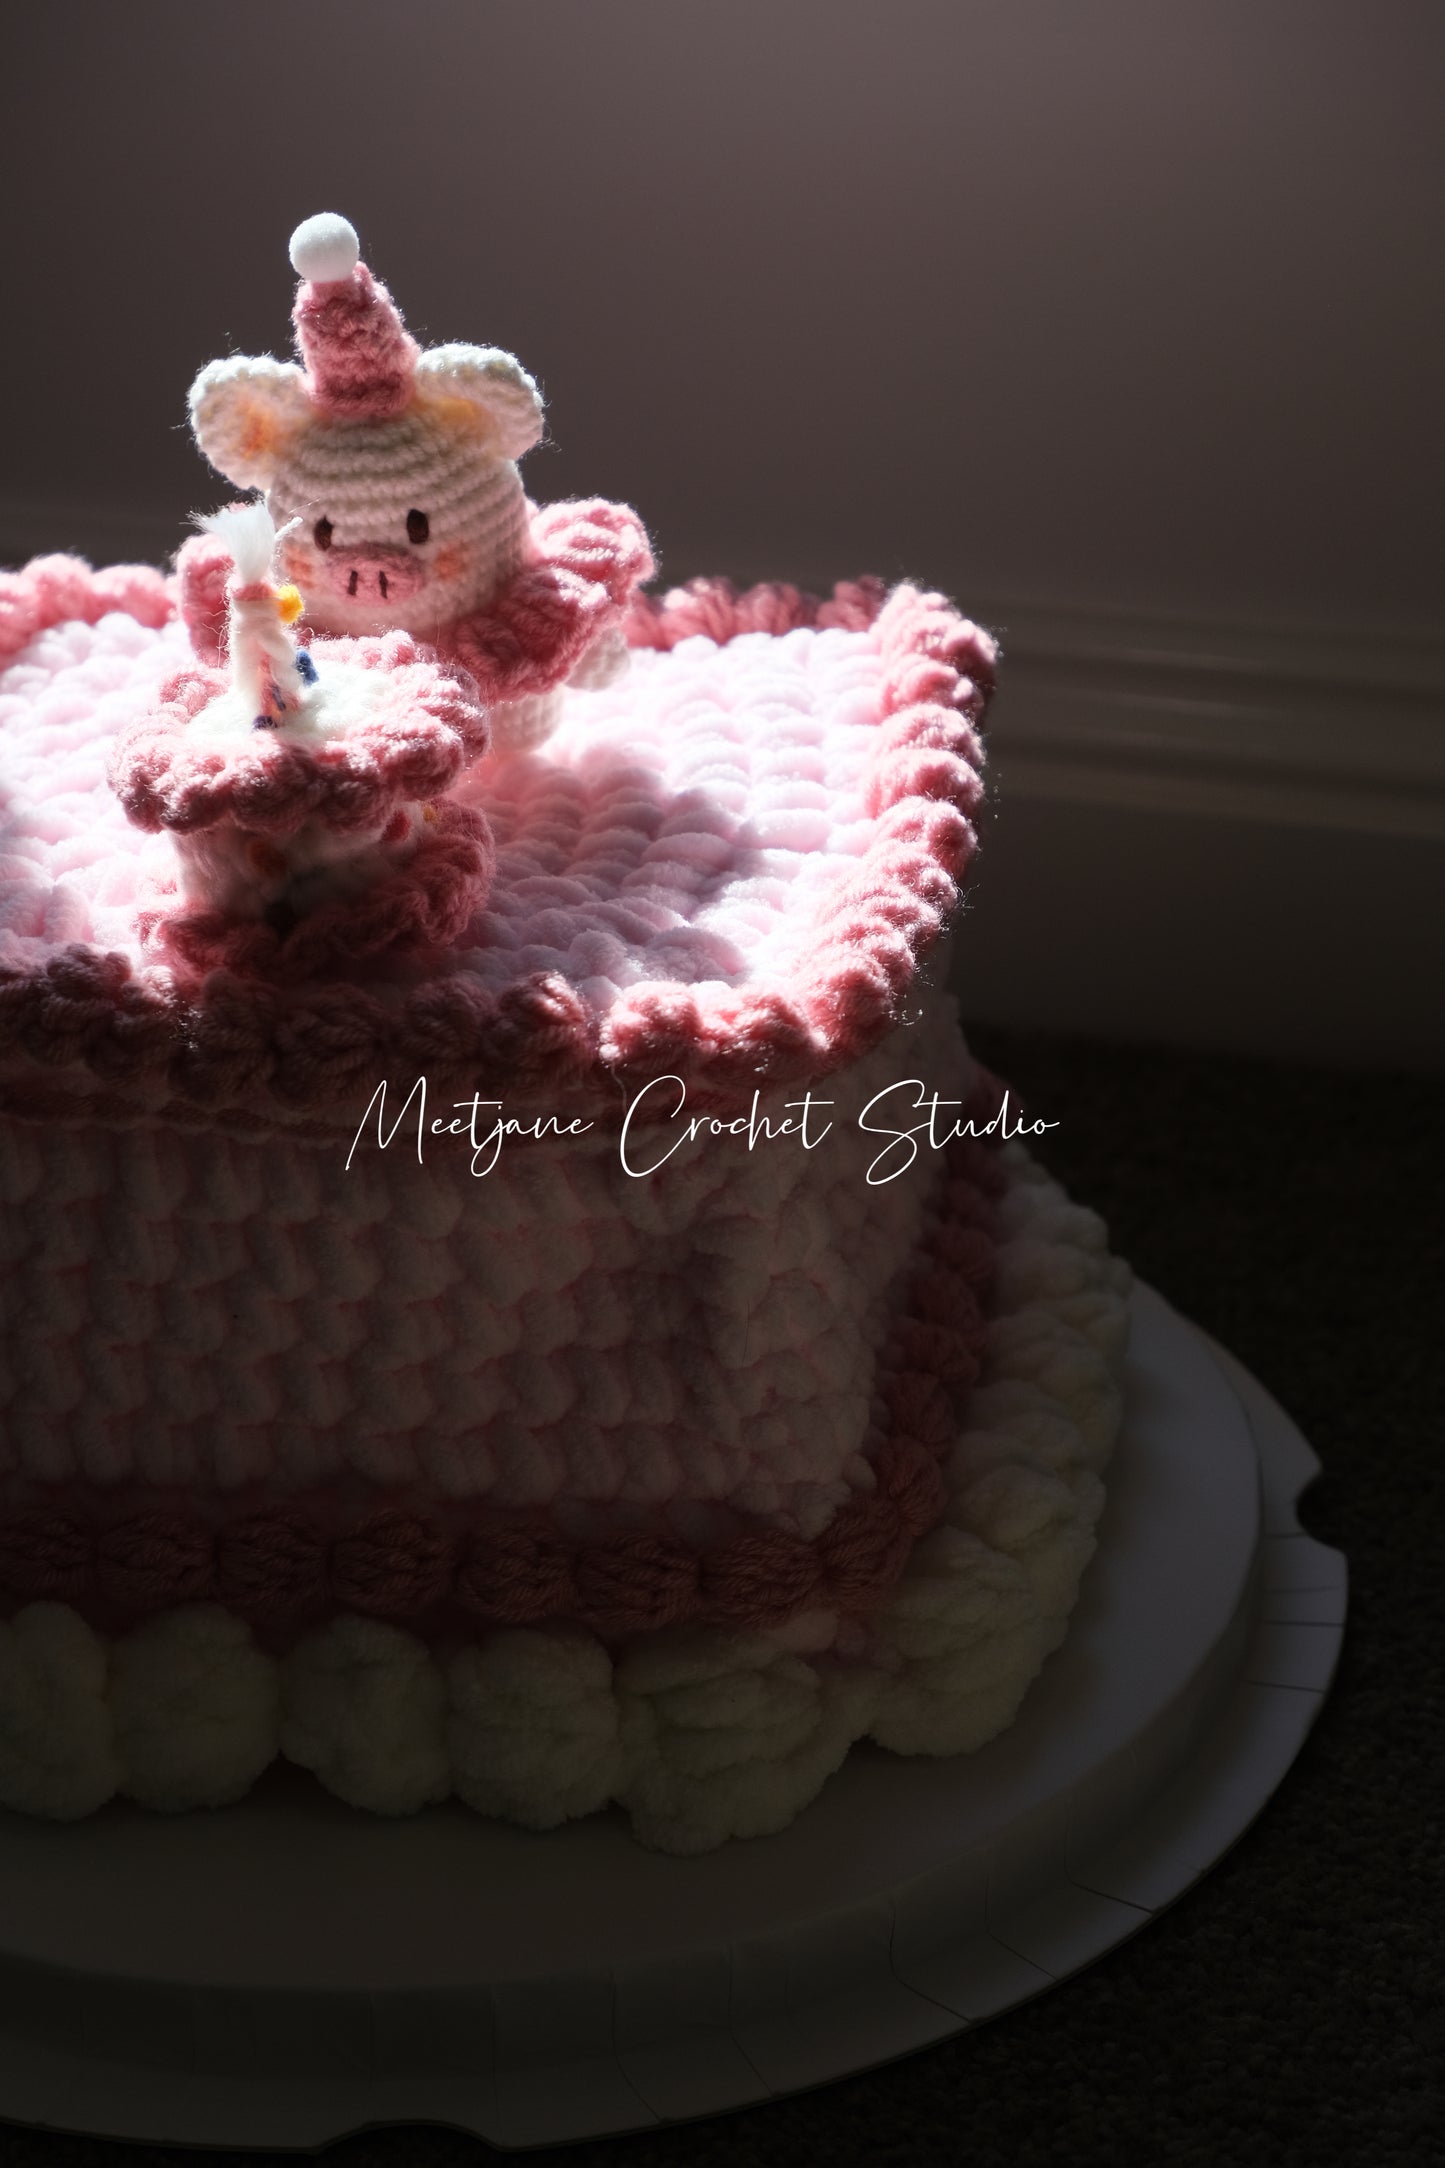 Crochet gift|Melbourne handmade|Birthday cake storage box|Pinky piggy